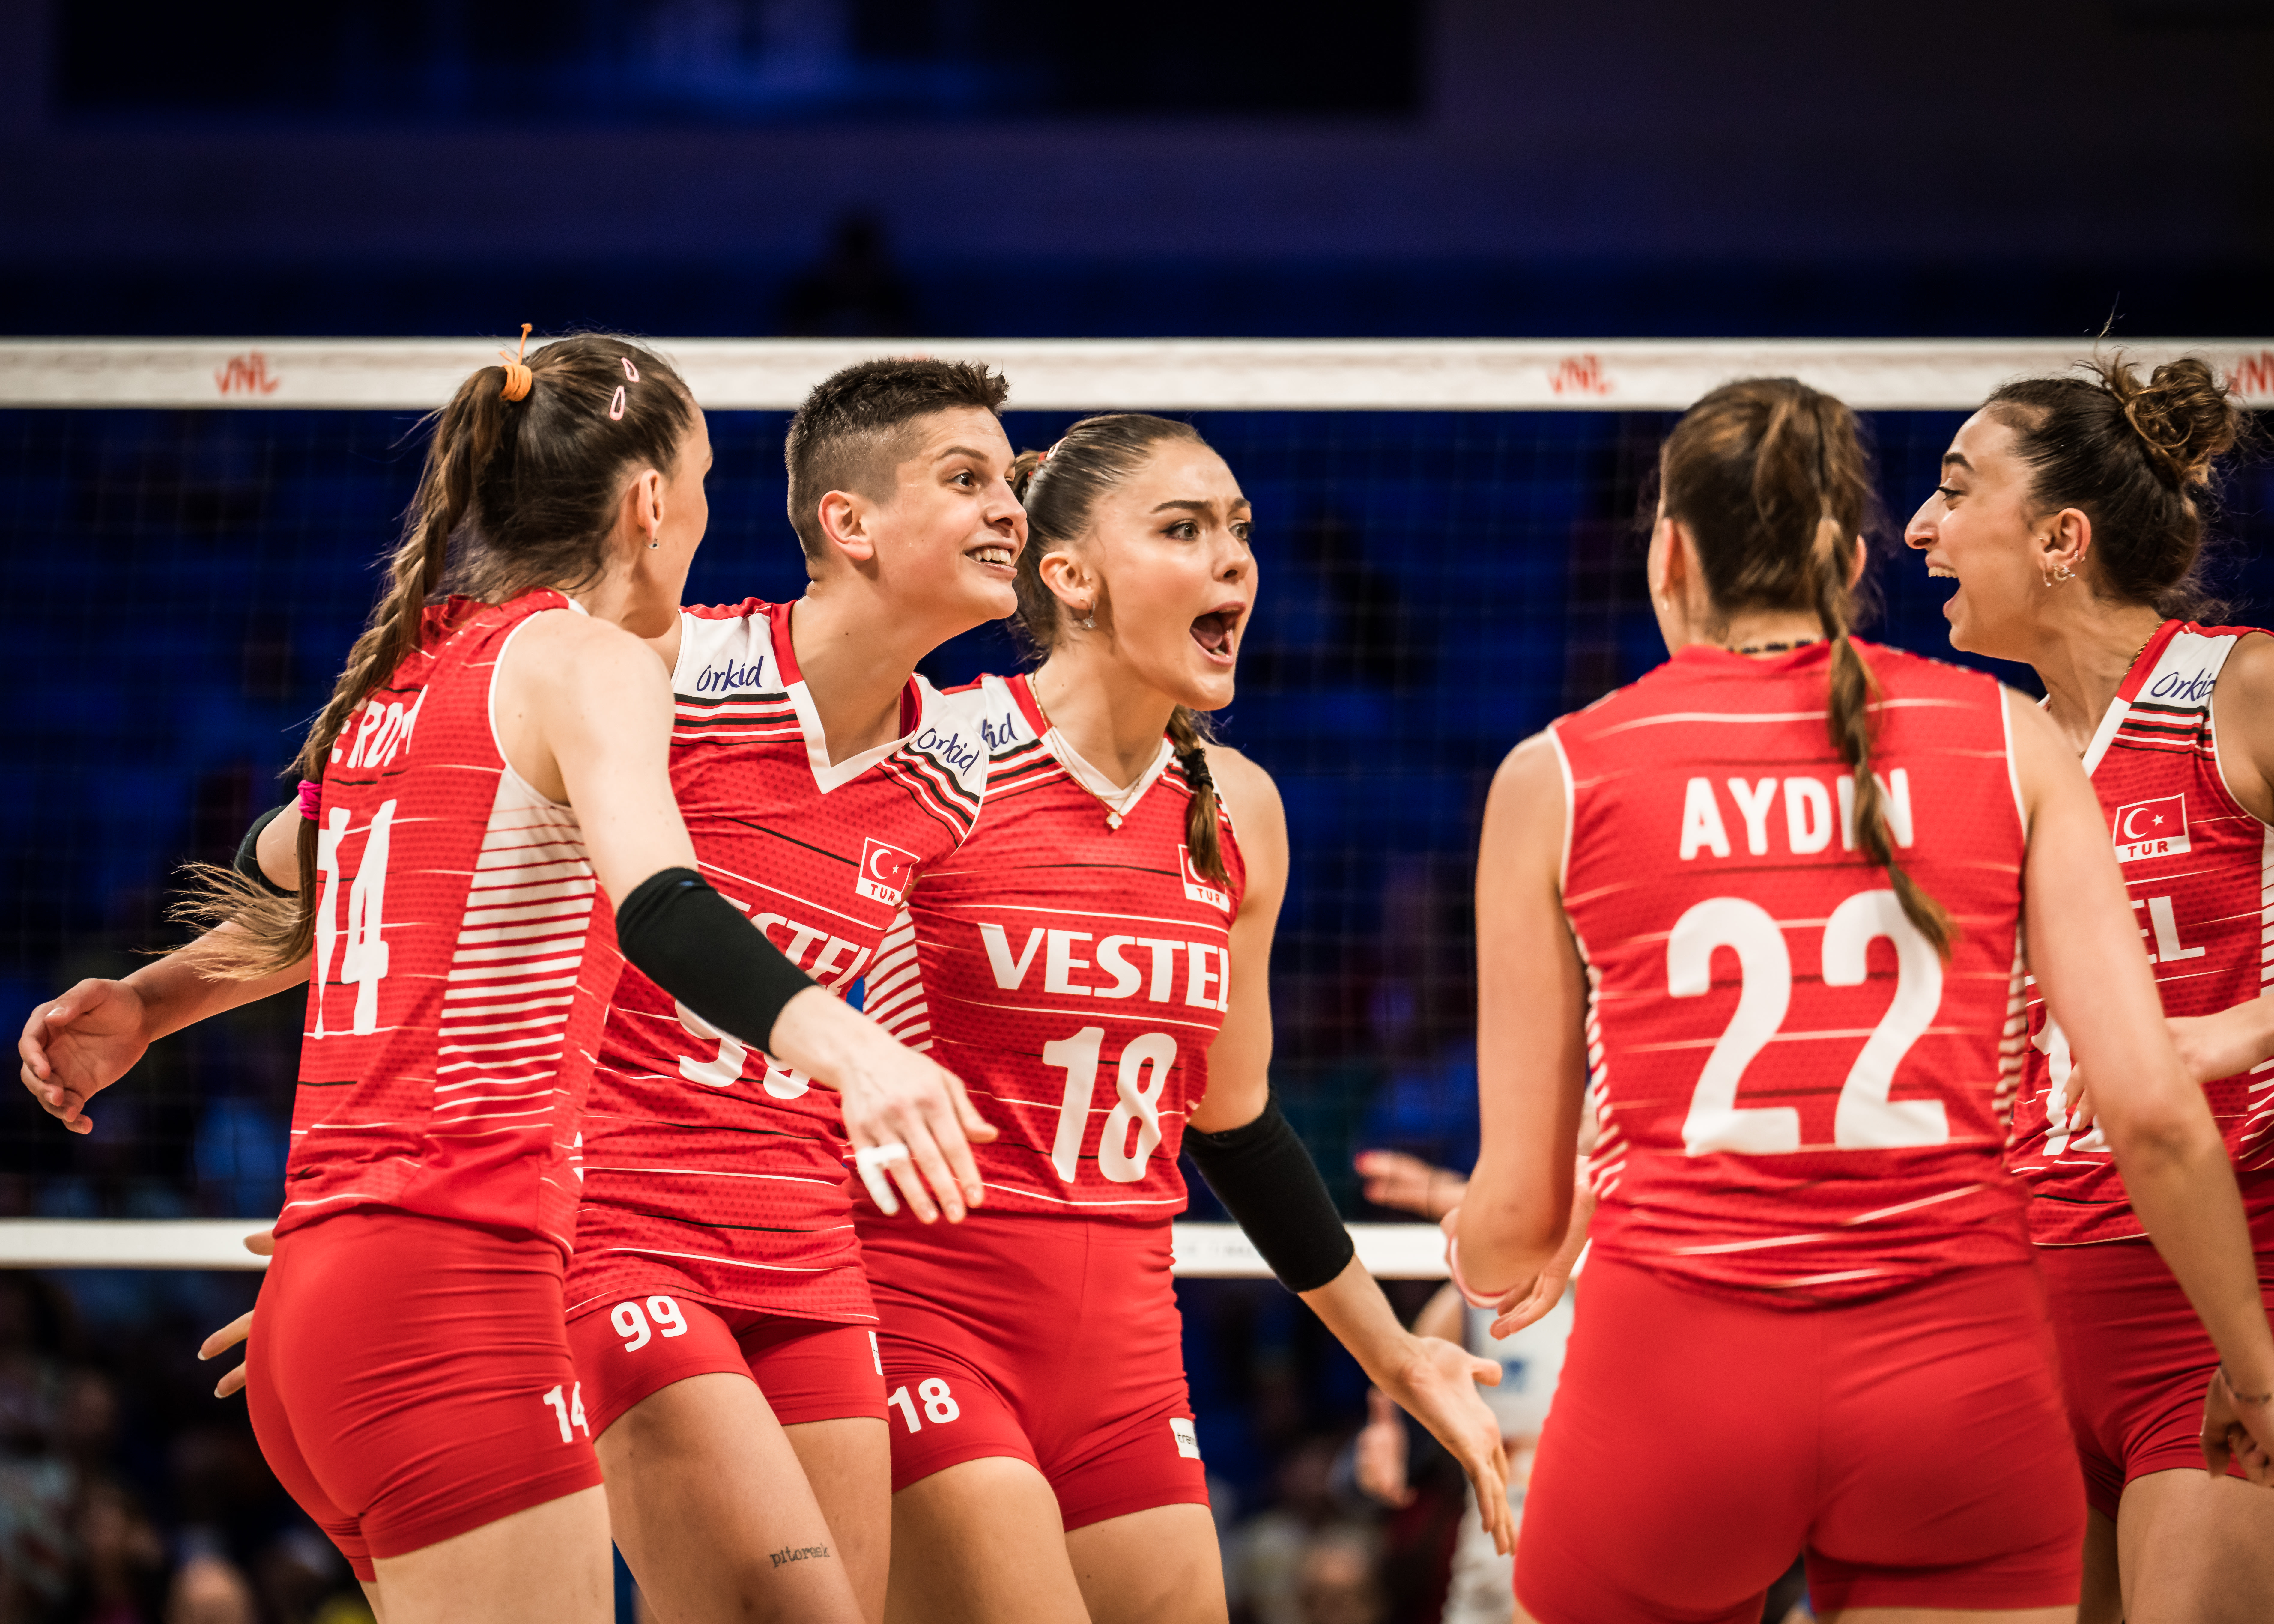 Türkiye to make fifth VNL semifinal appearance in Arlington volleyballworld